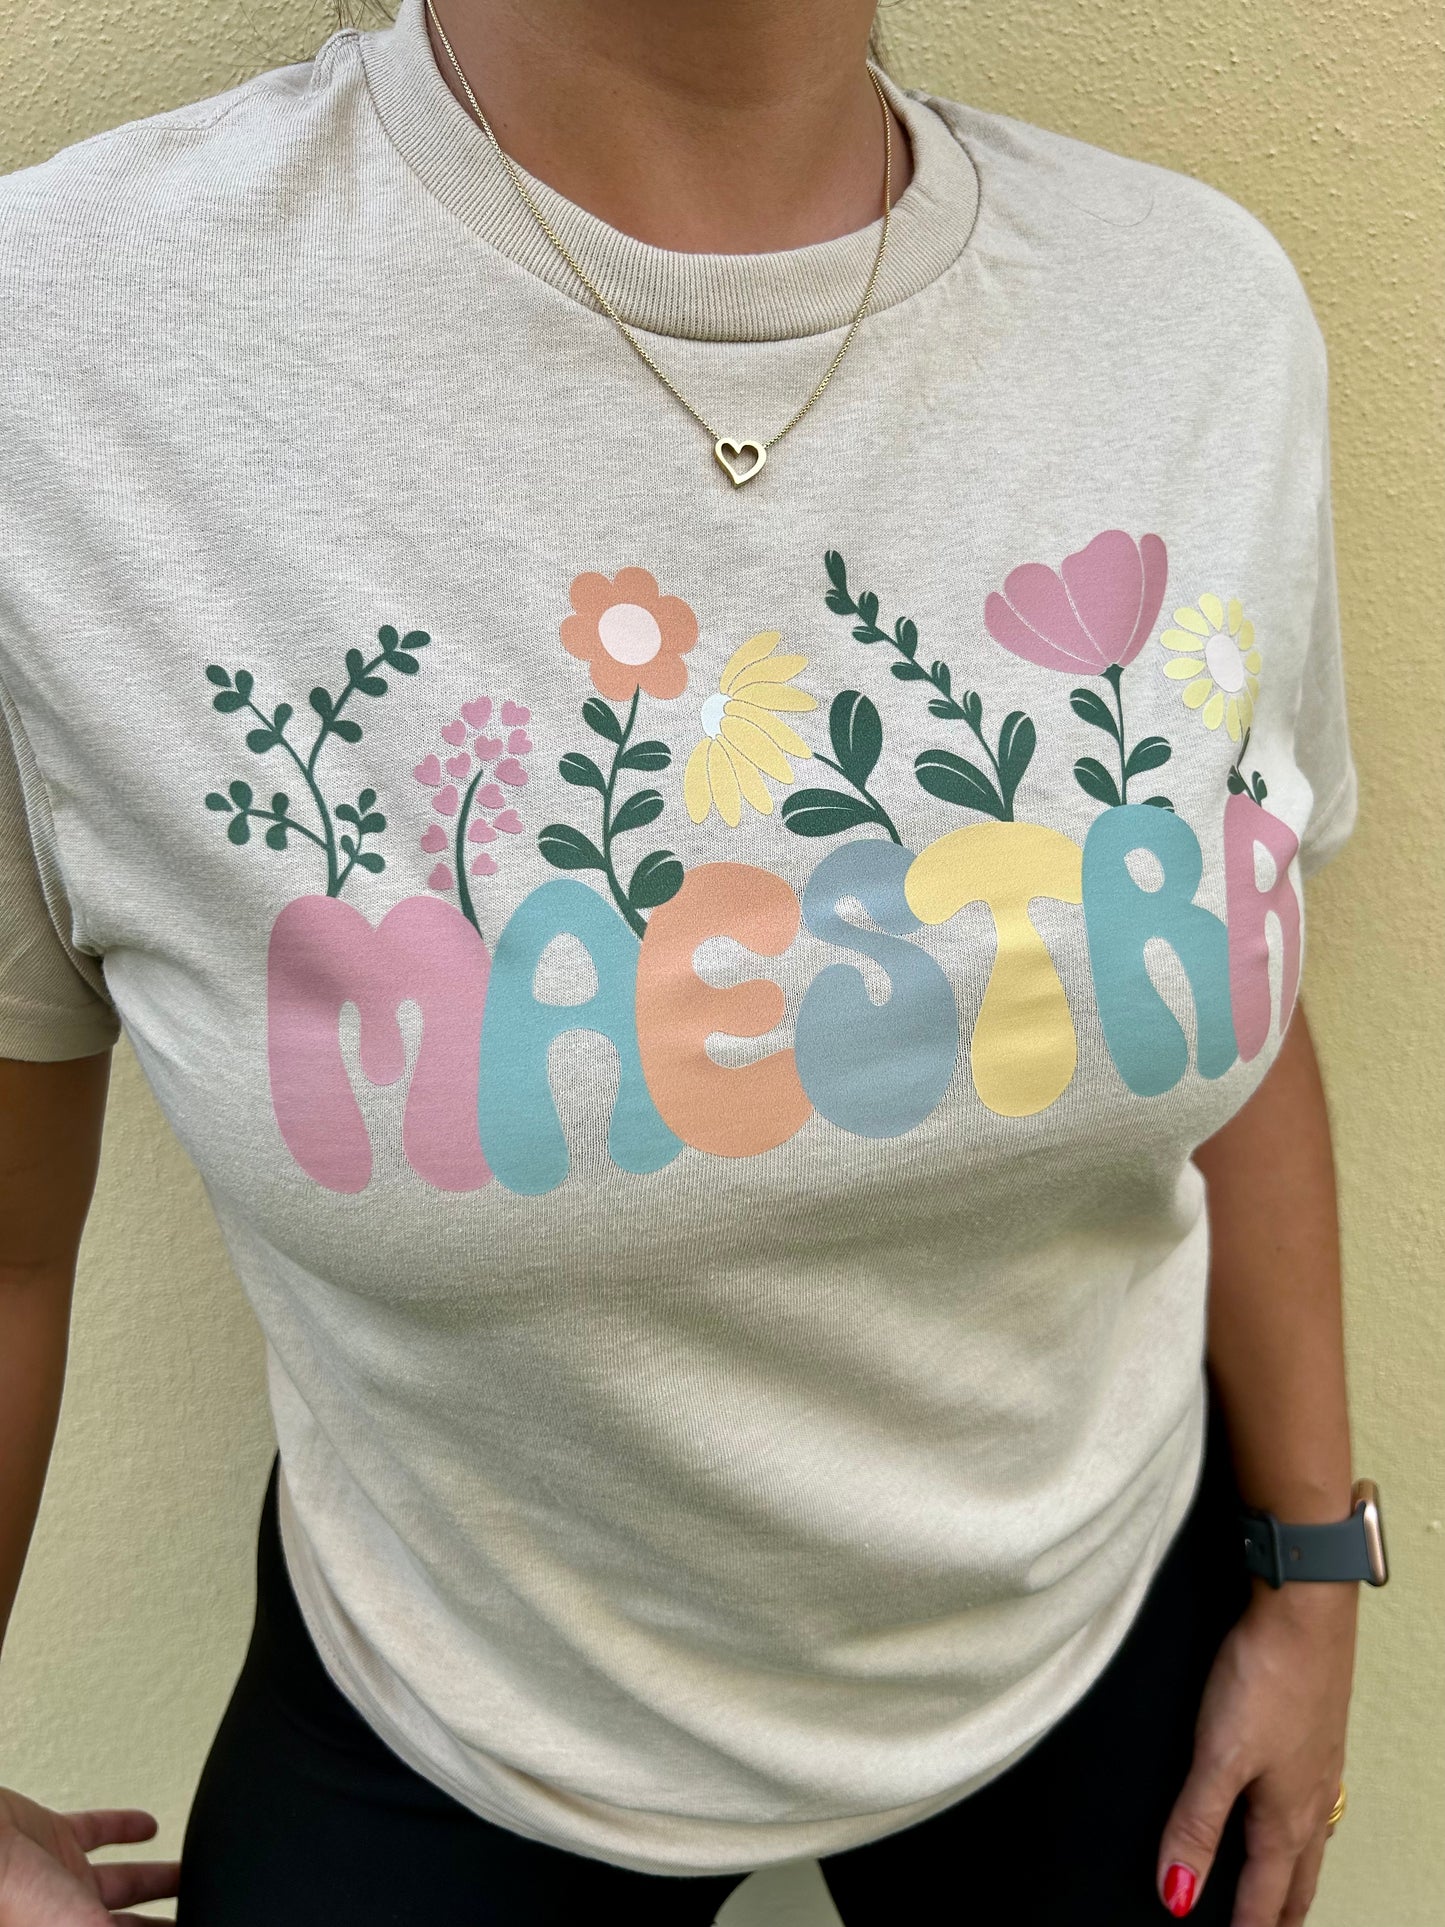 Camisa: “Maestra”